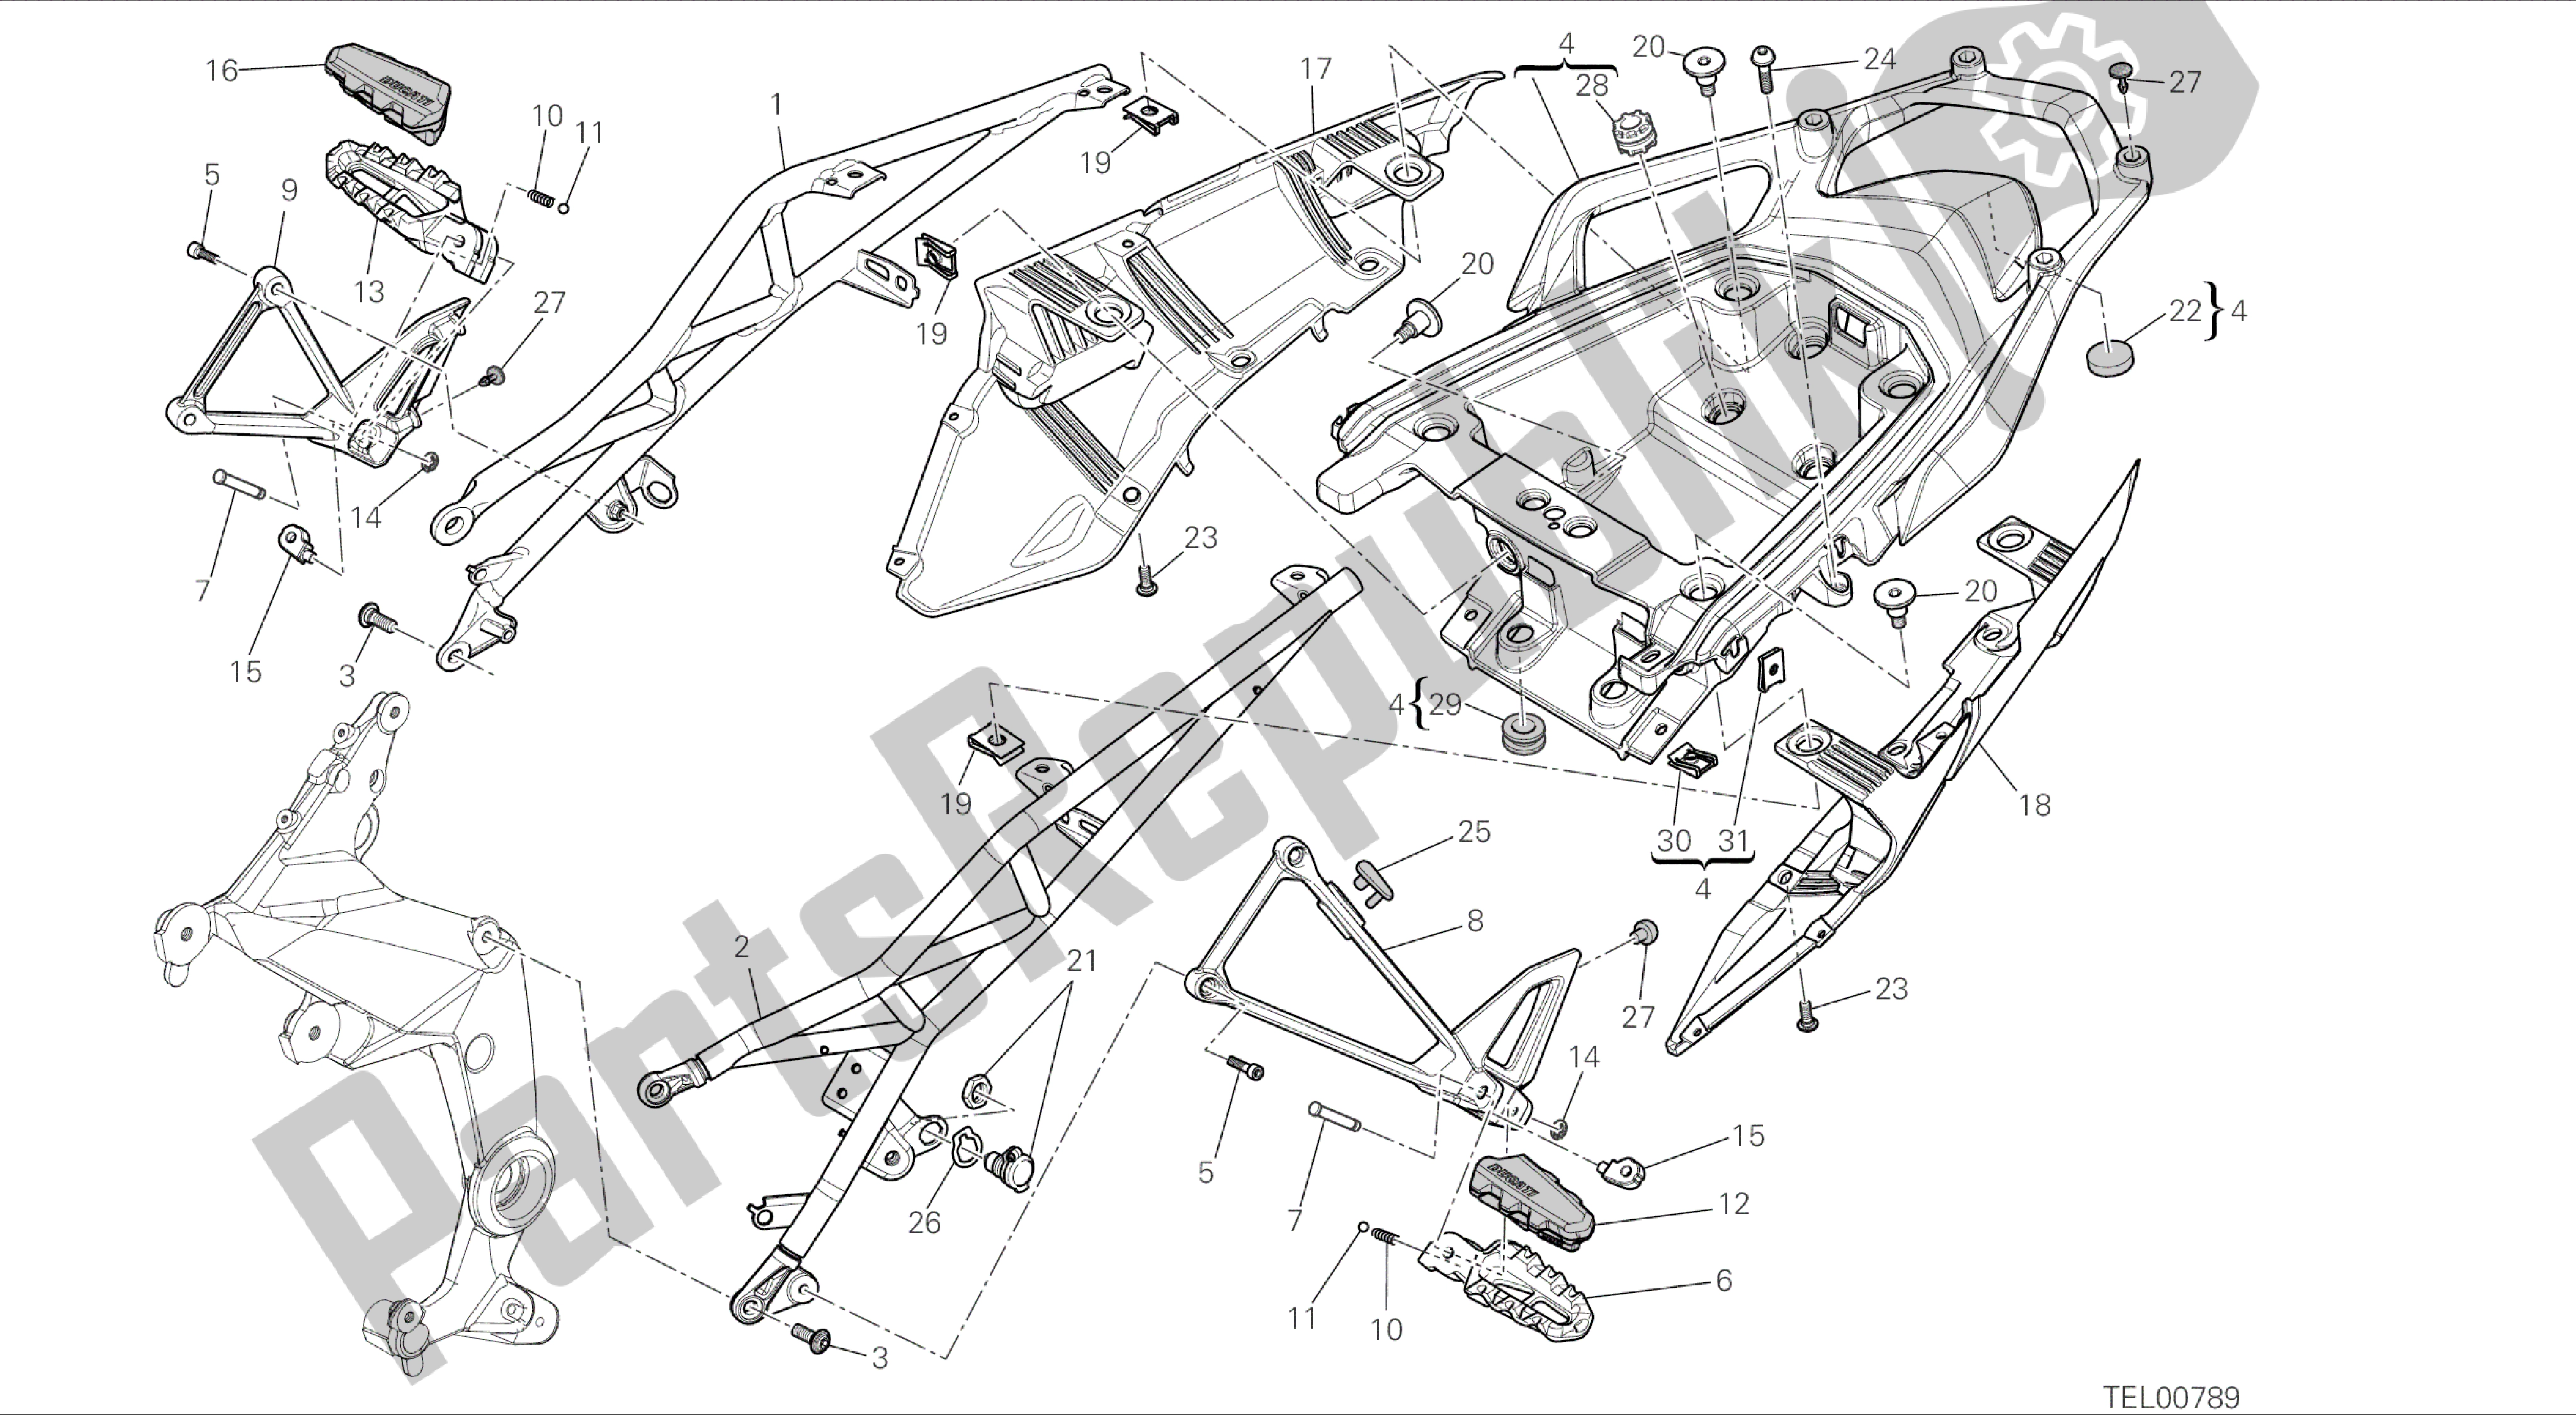 Todas las partes para Dibujo 027 - Cuadro Trasero Comp. [mod: Ms1200-a; Xst: Marco De Grupo Aus, Eur, Fra, Tha] de Ducati Multistrada 1200 2014